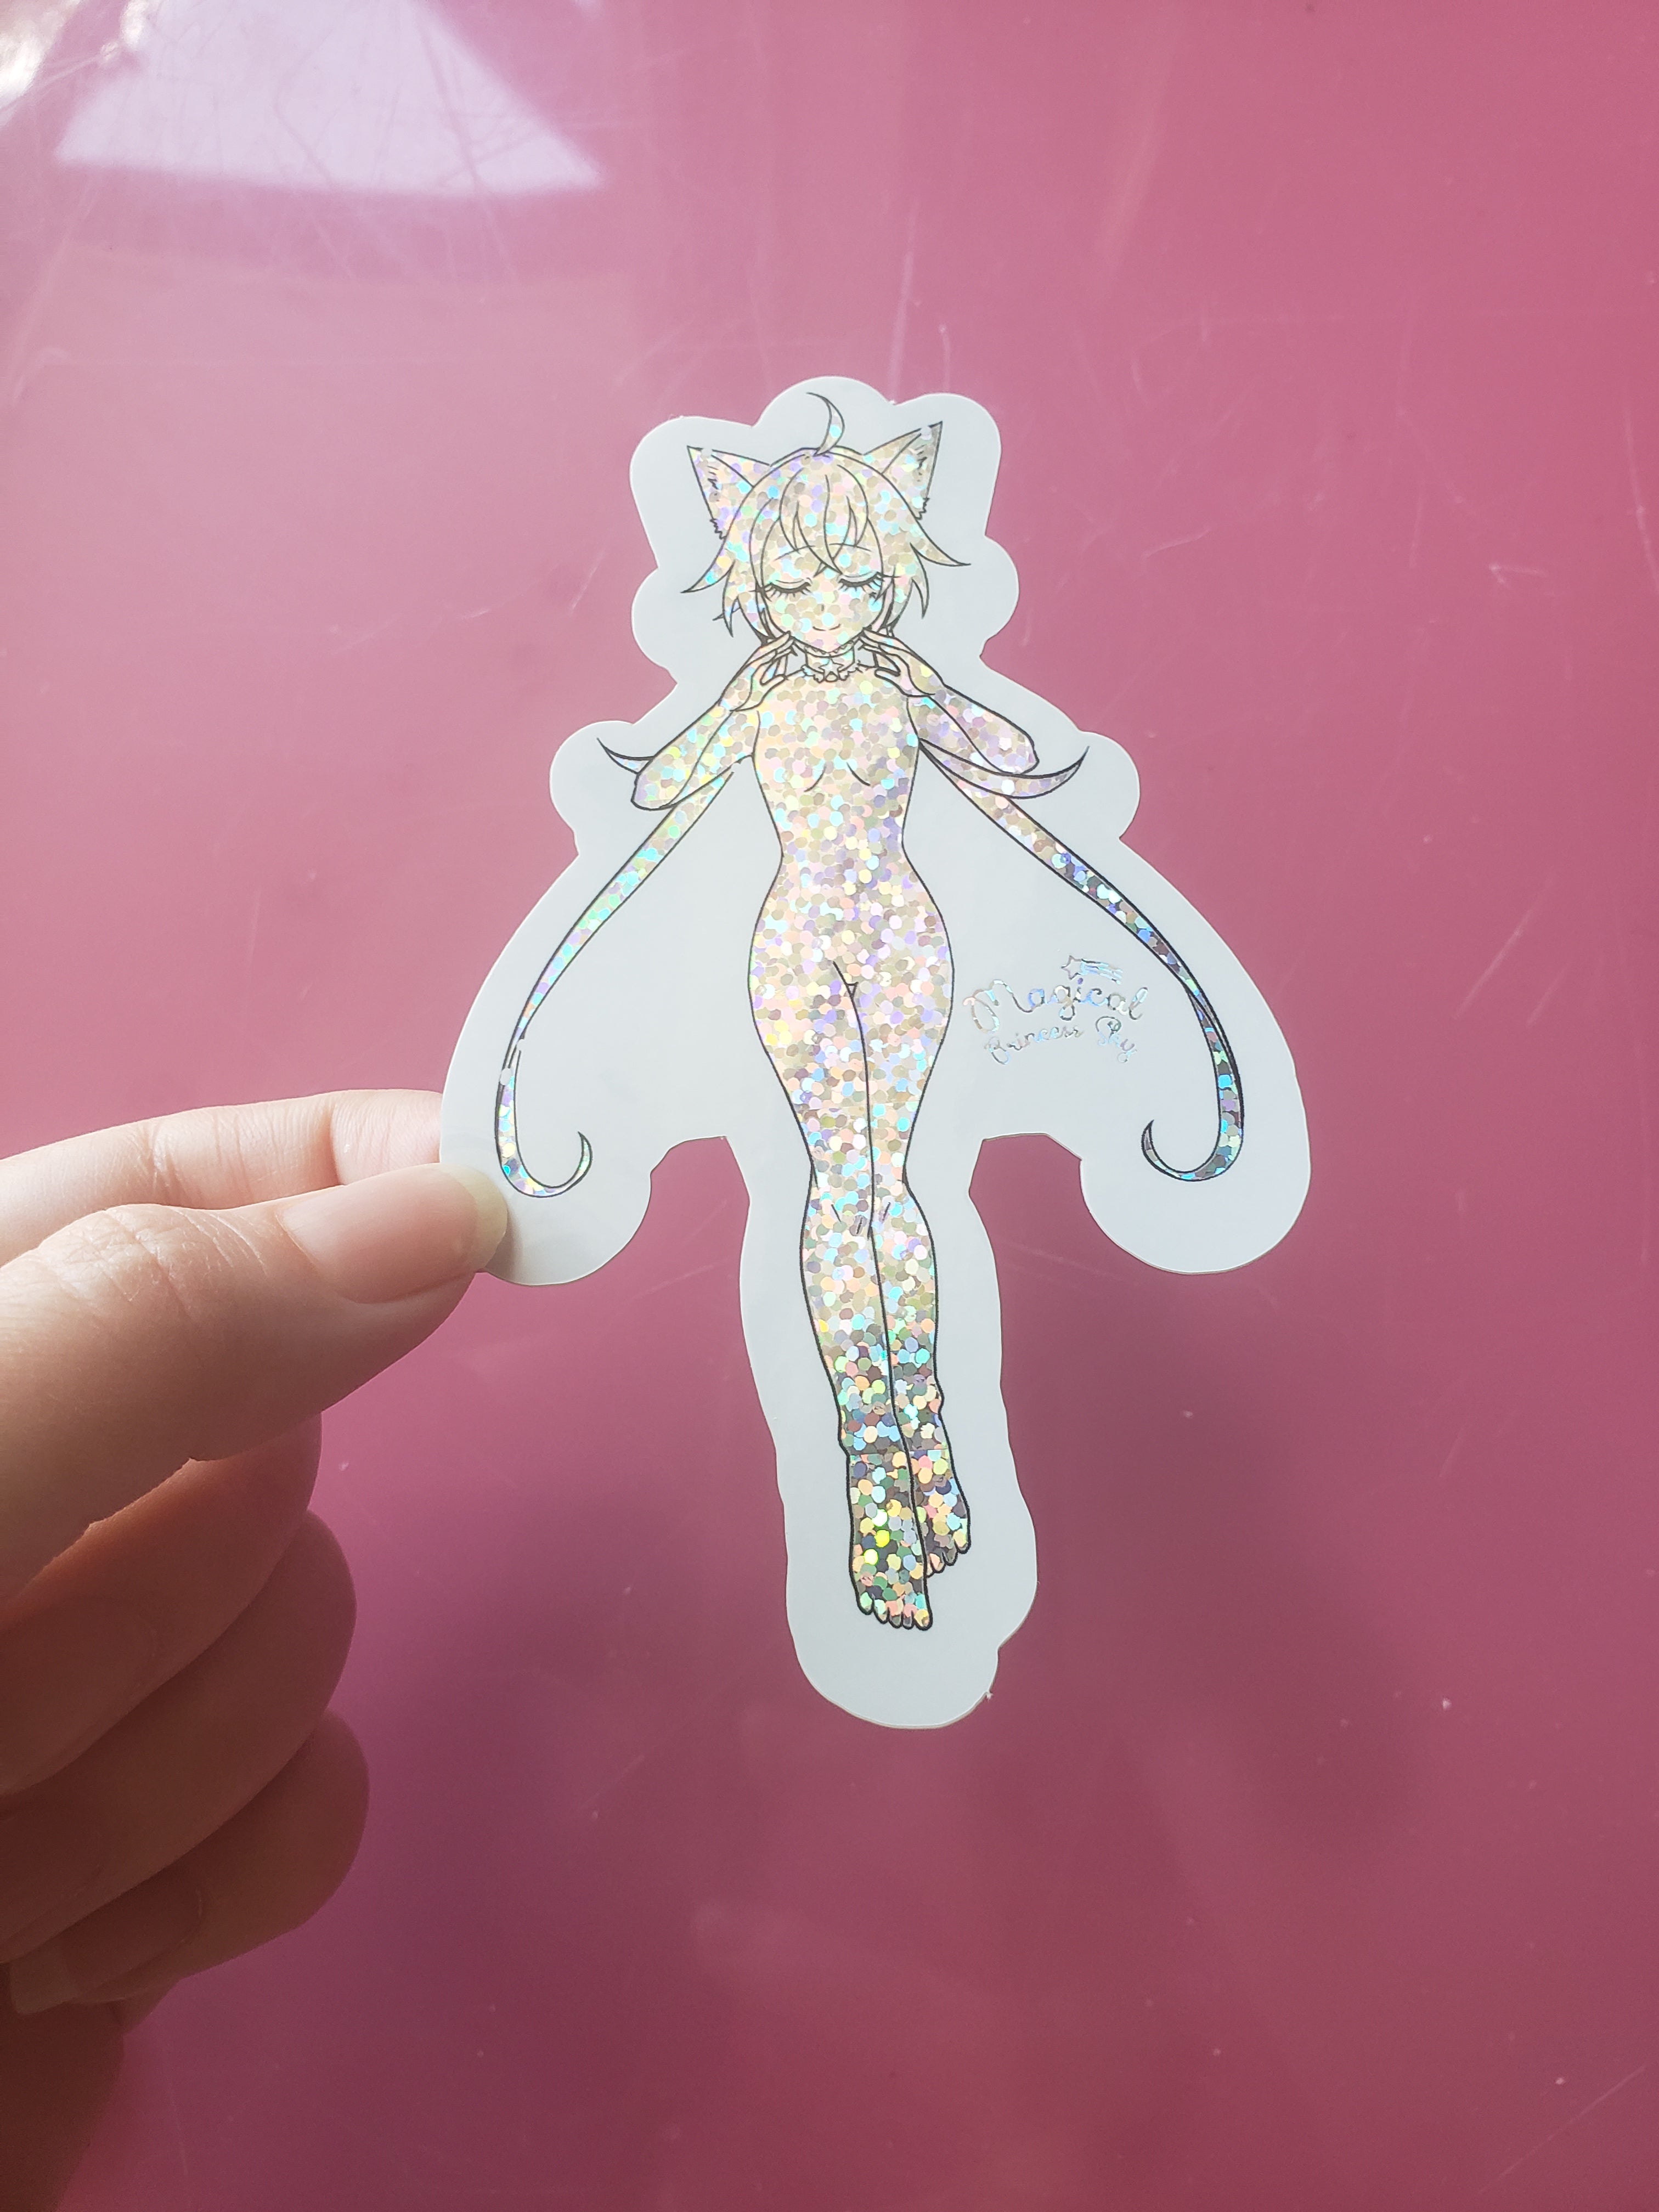 Holographic glitter vinyl sticker - 3 x 4.5 inch Magical girl transformation from original manga Magical princess Sky